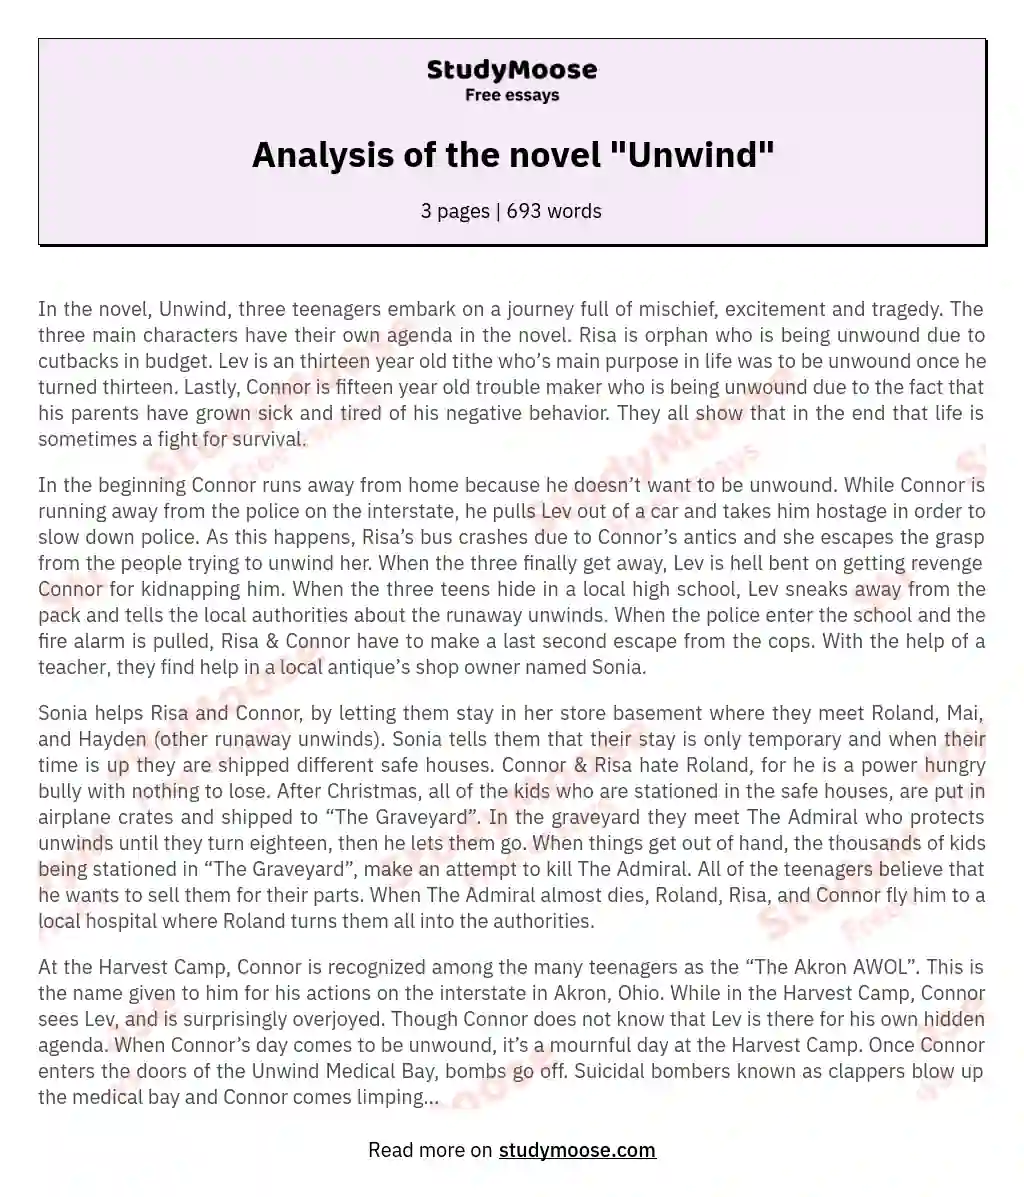 Analysis of the novel "Unwind"